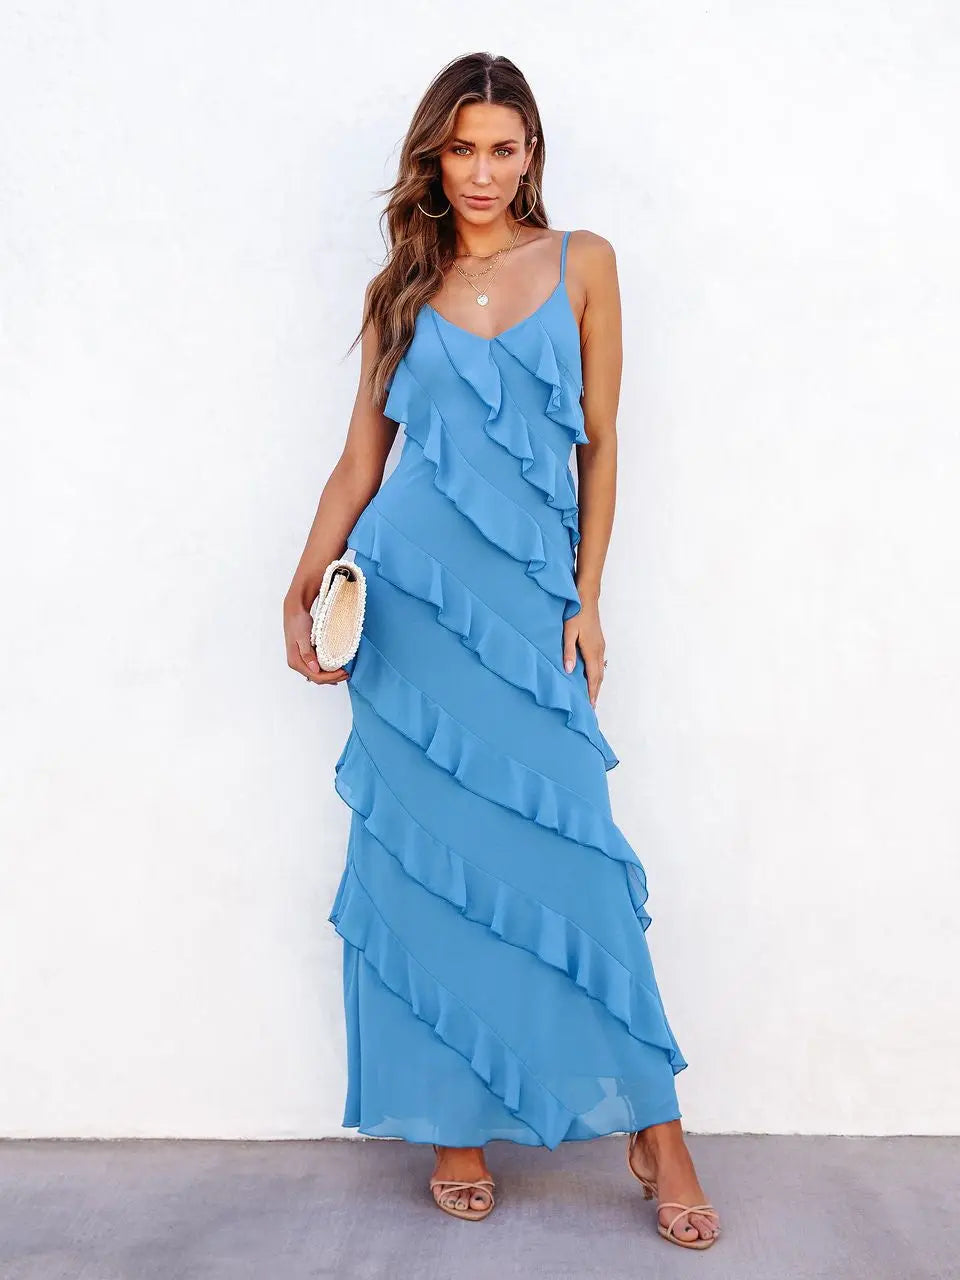 Summer Women's Sexy Long Slip Dress - Fashion Falbala Solid Color